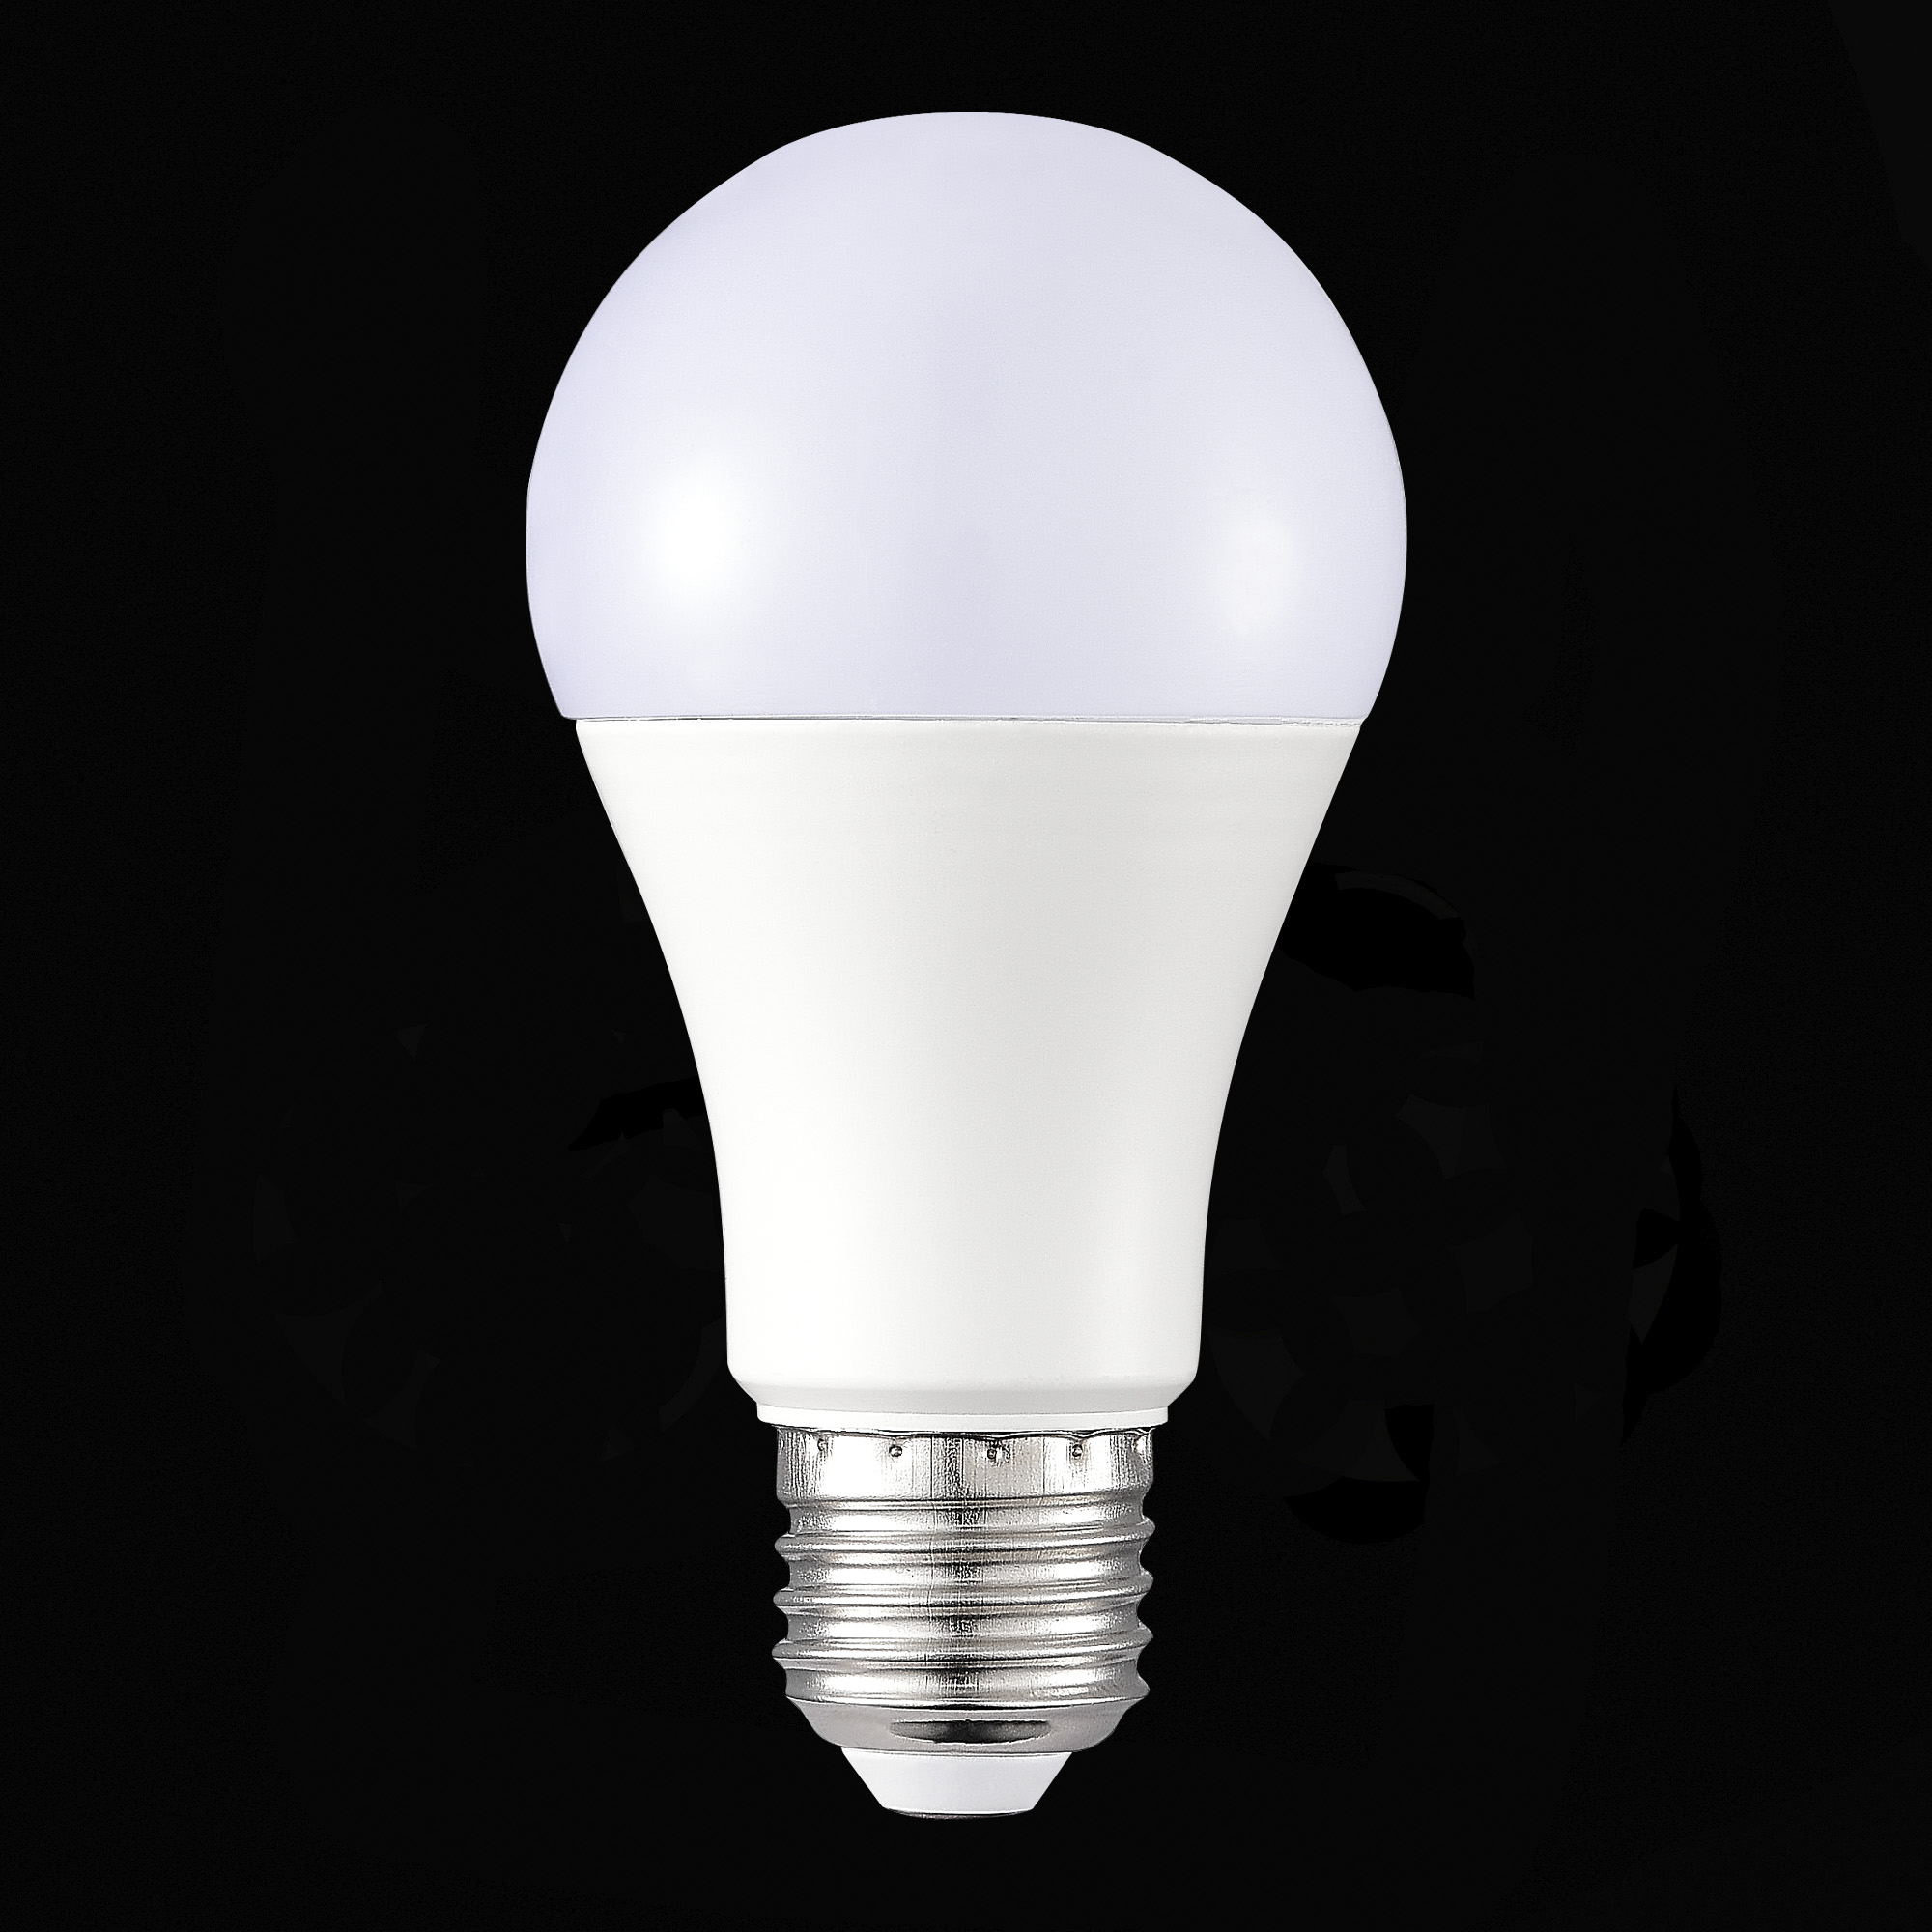 Светодиодная лампа ST Luce 9W 810lm 2700K-6500K E27 ST9100.279.09, цвет белый - фото 2